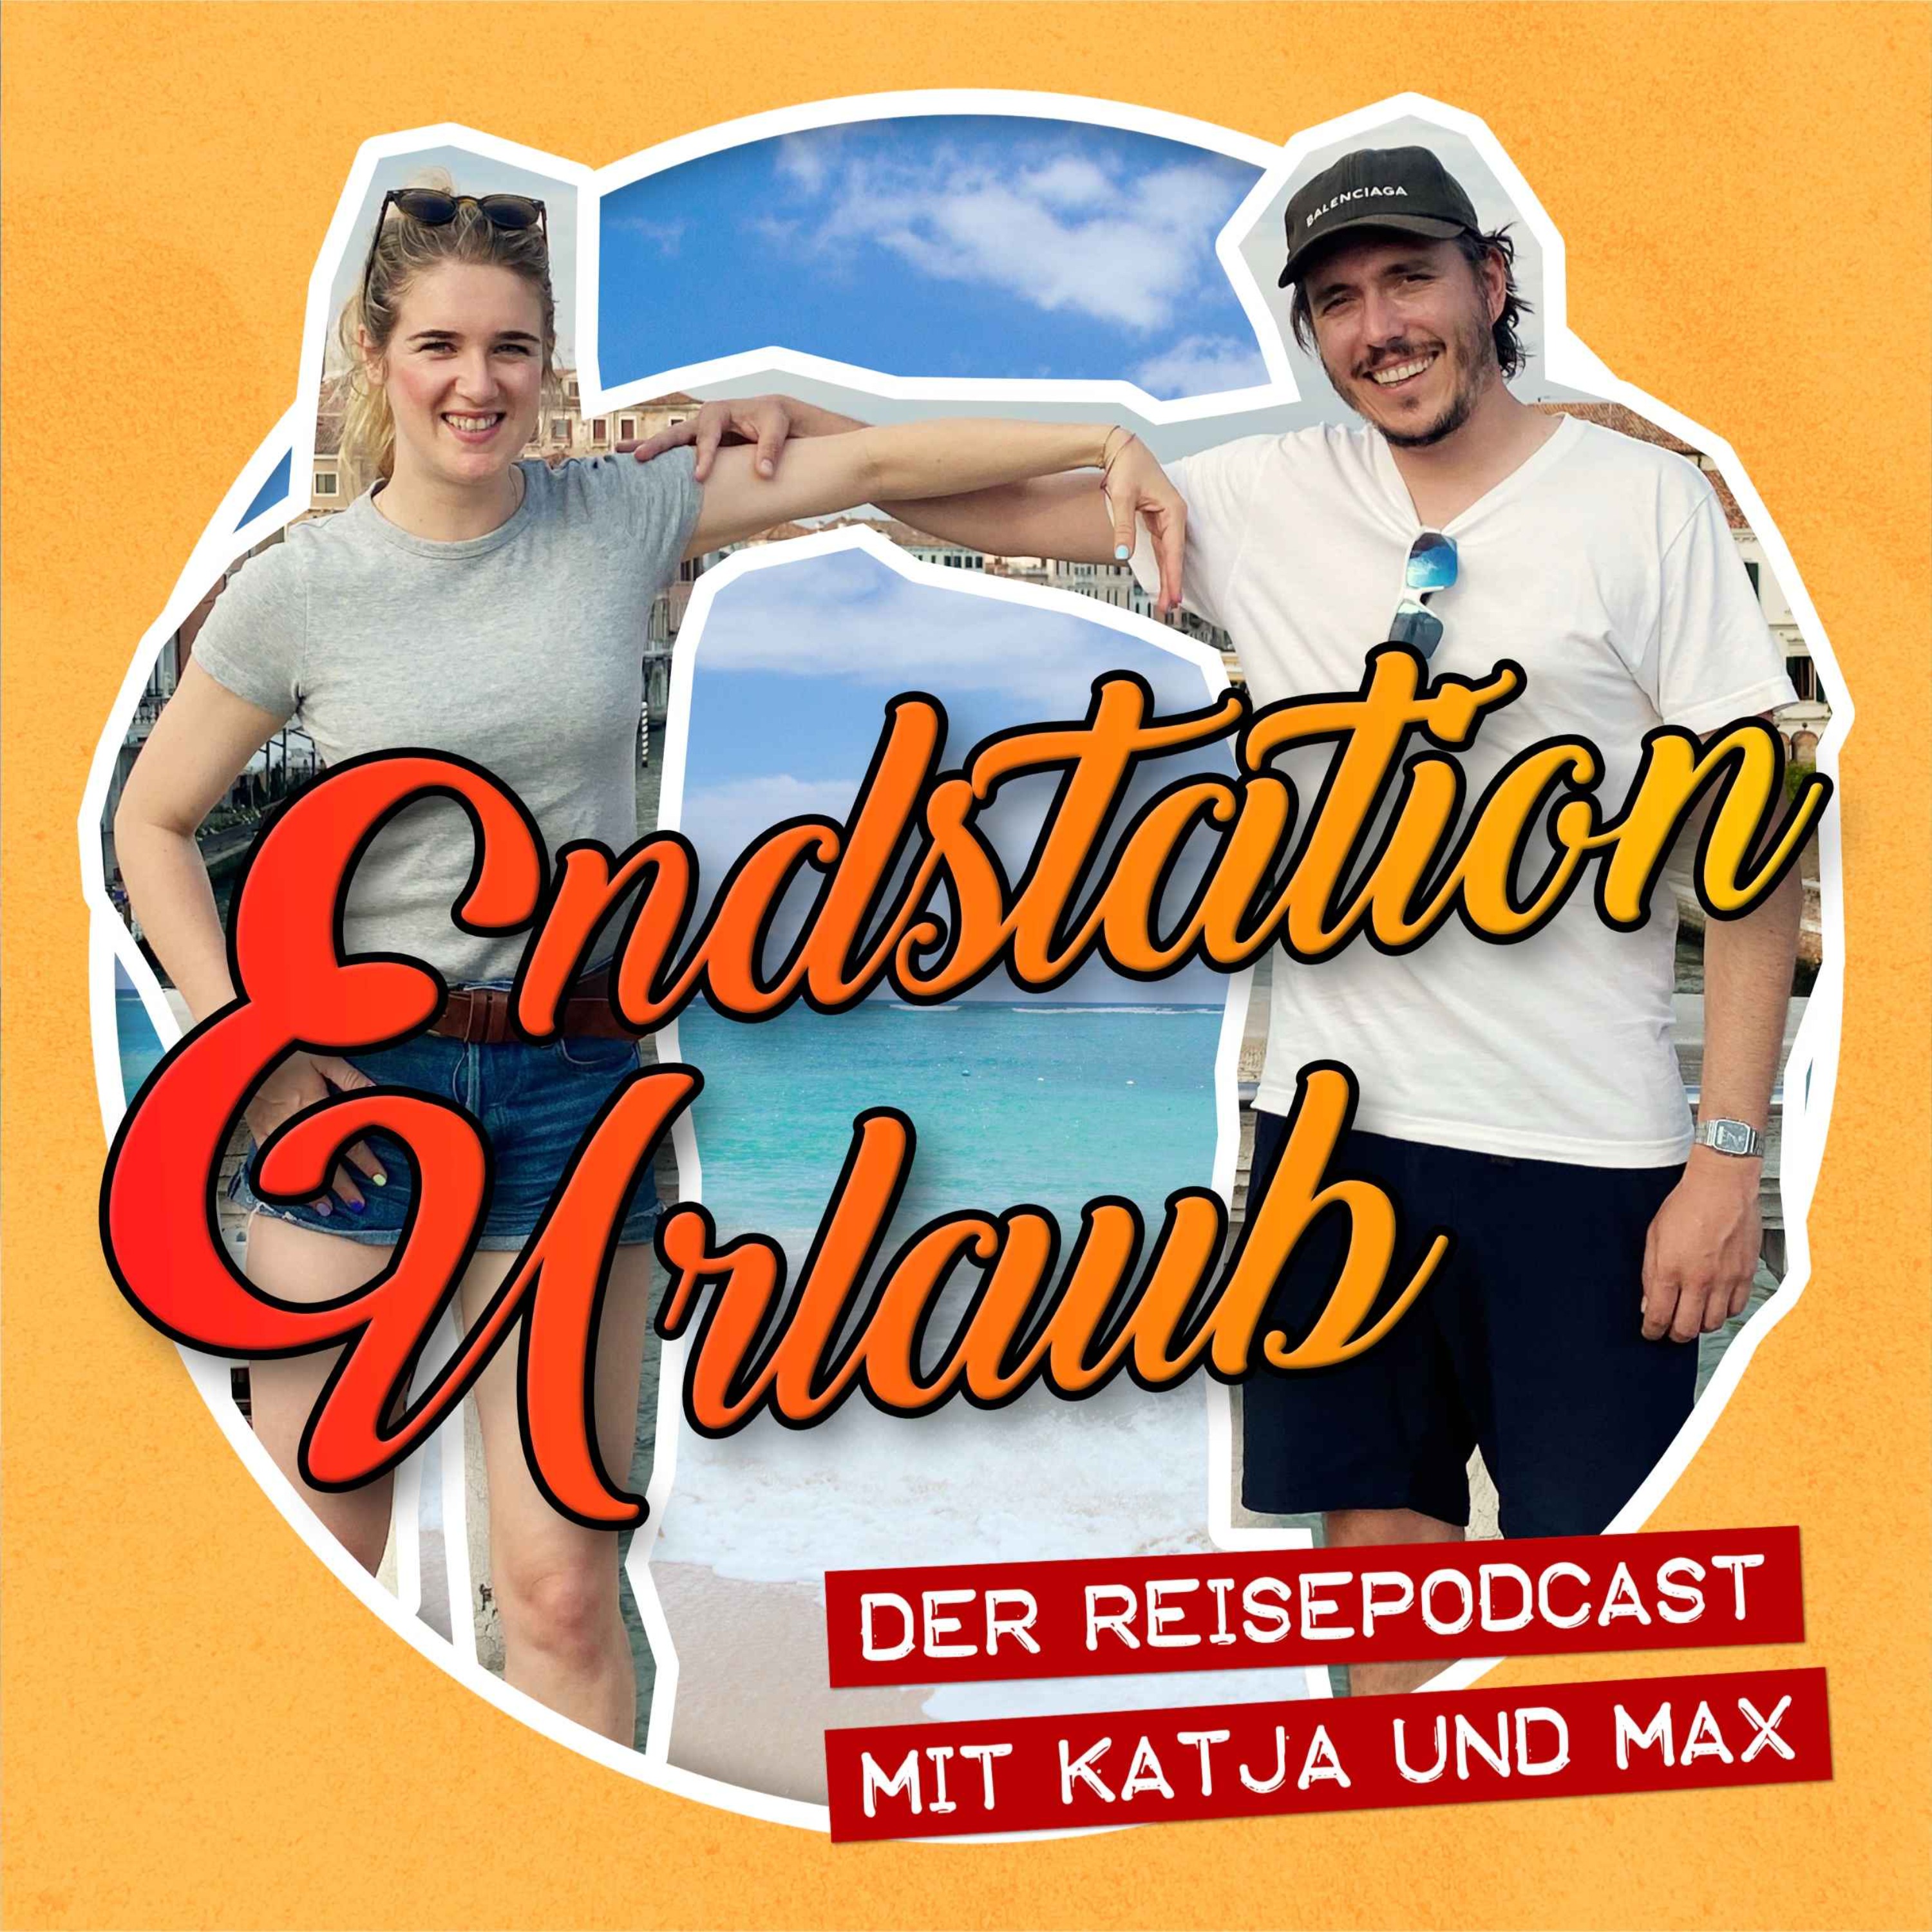 cover art for Teaser "Endstation Urlaub"